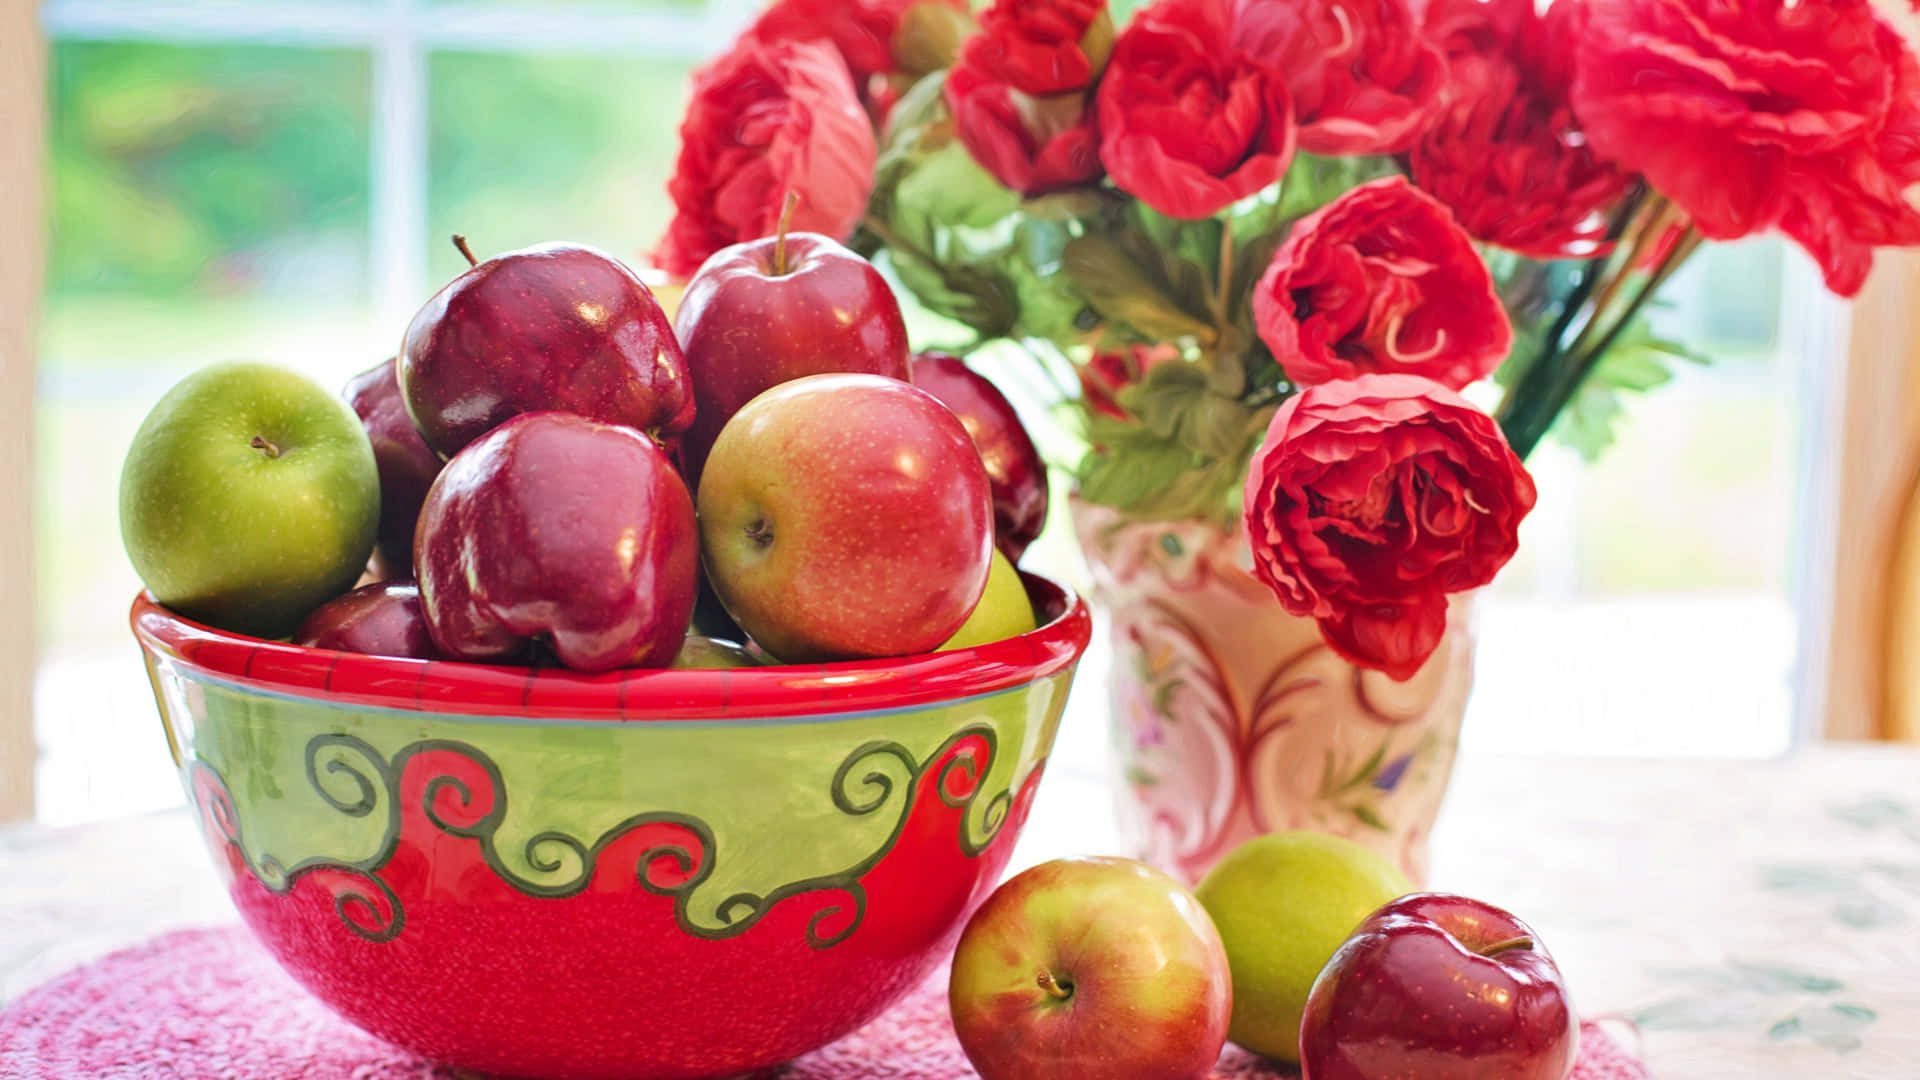 1440p Roses Beside Apples Background